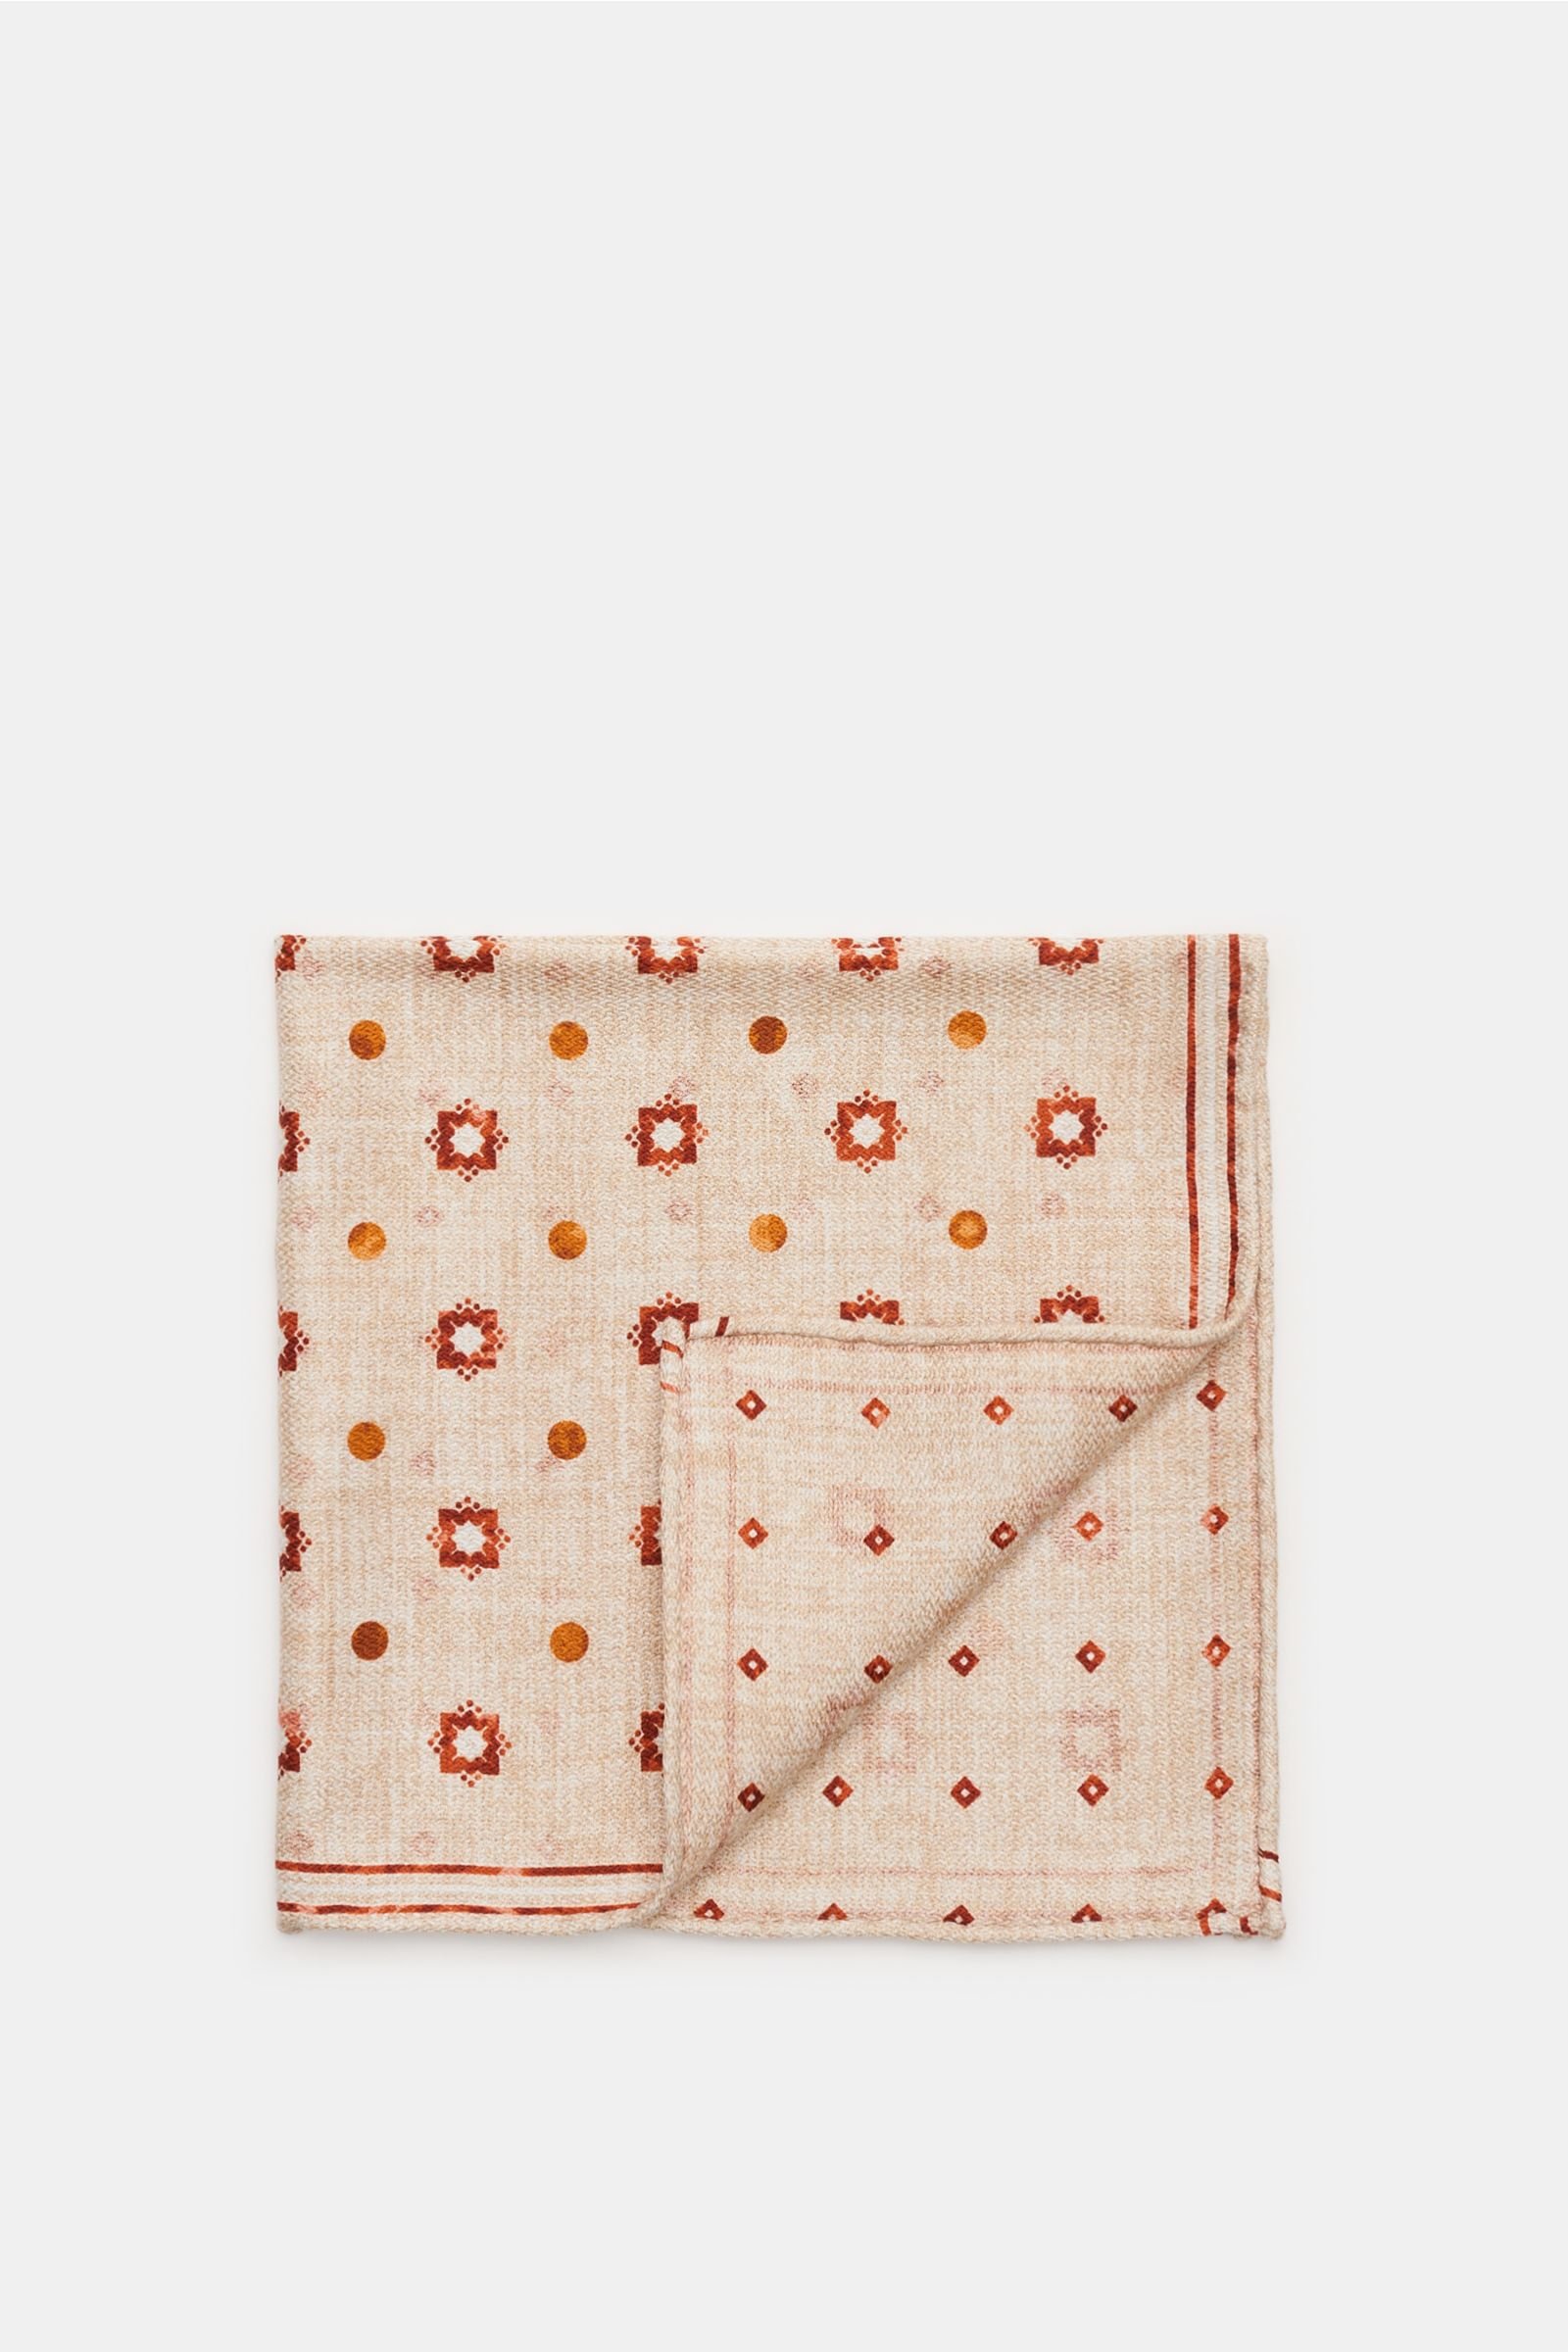 Pocket square beige/rust-red patterned